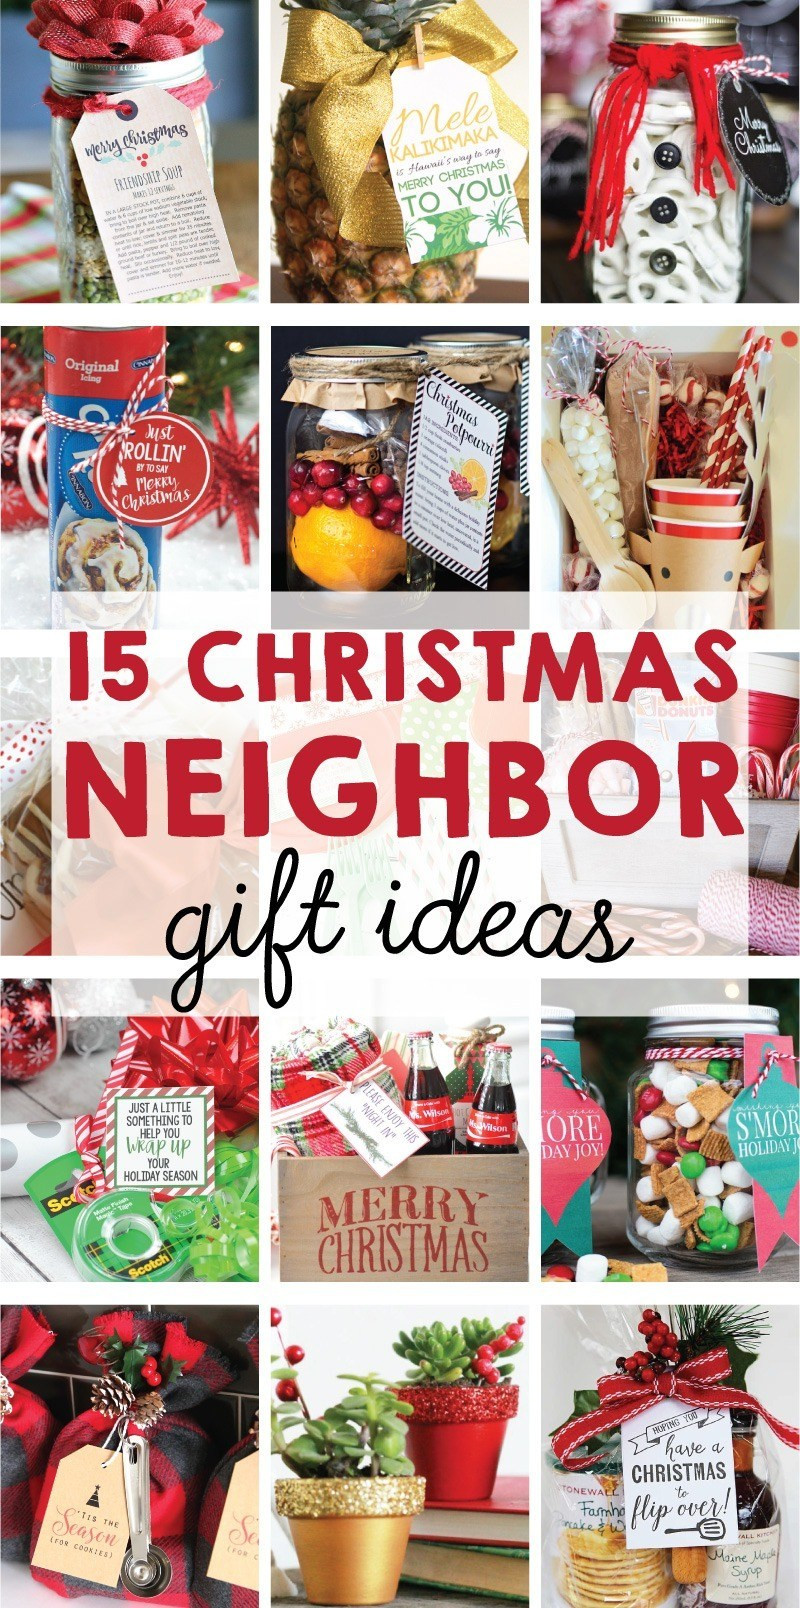 Christmas Gift Ideas For Neighbors
 The BEST 15 Christmas Neighbor Gift Ideas on Love the Day